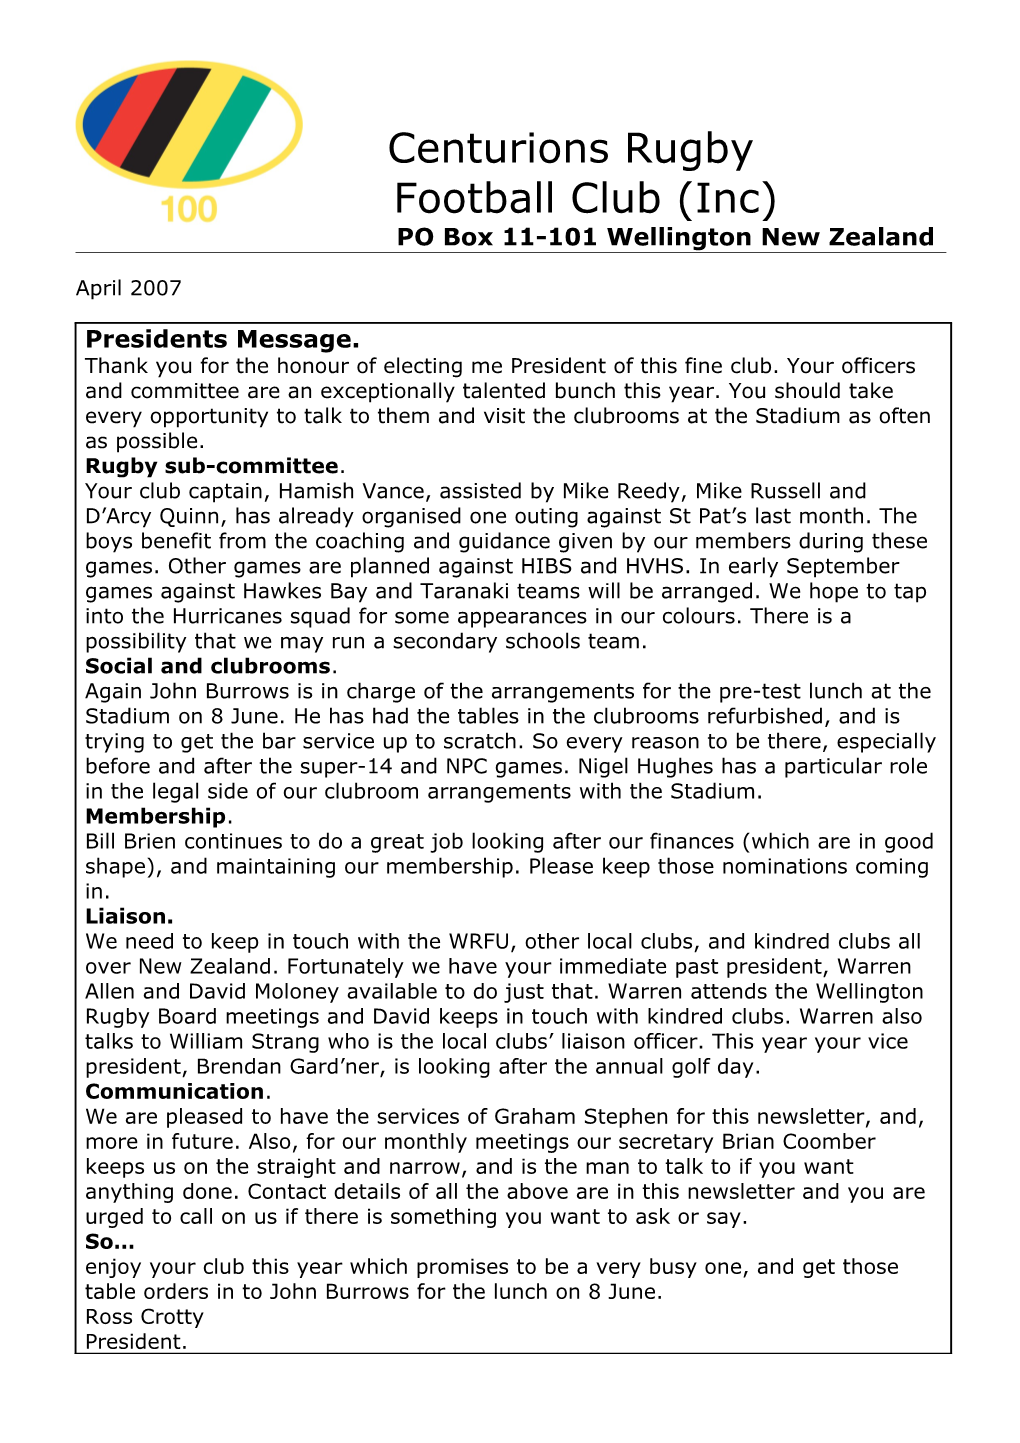 PO Box 11-101 Wellingtonnew Zealand